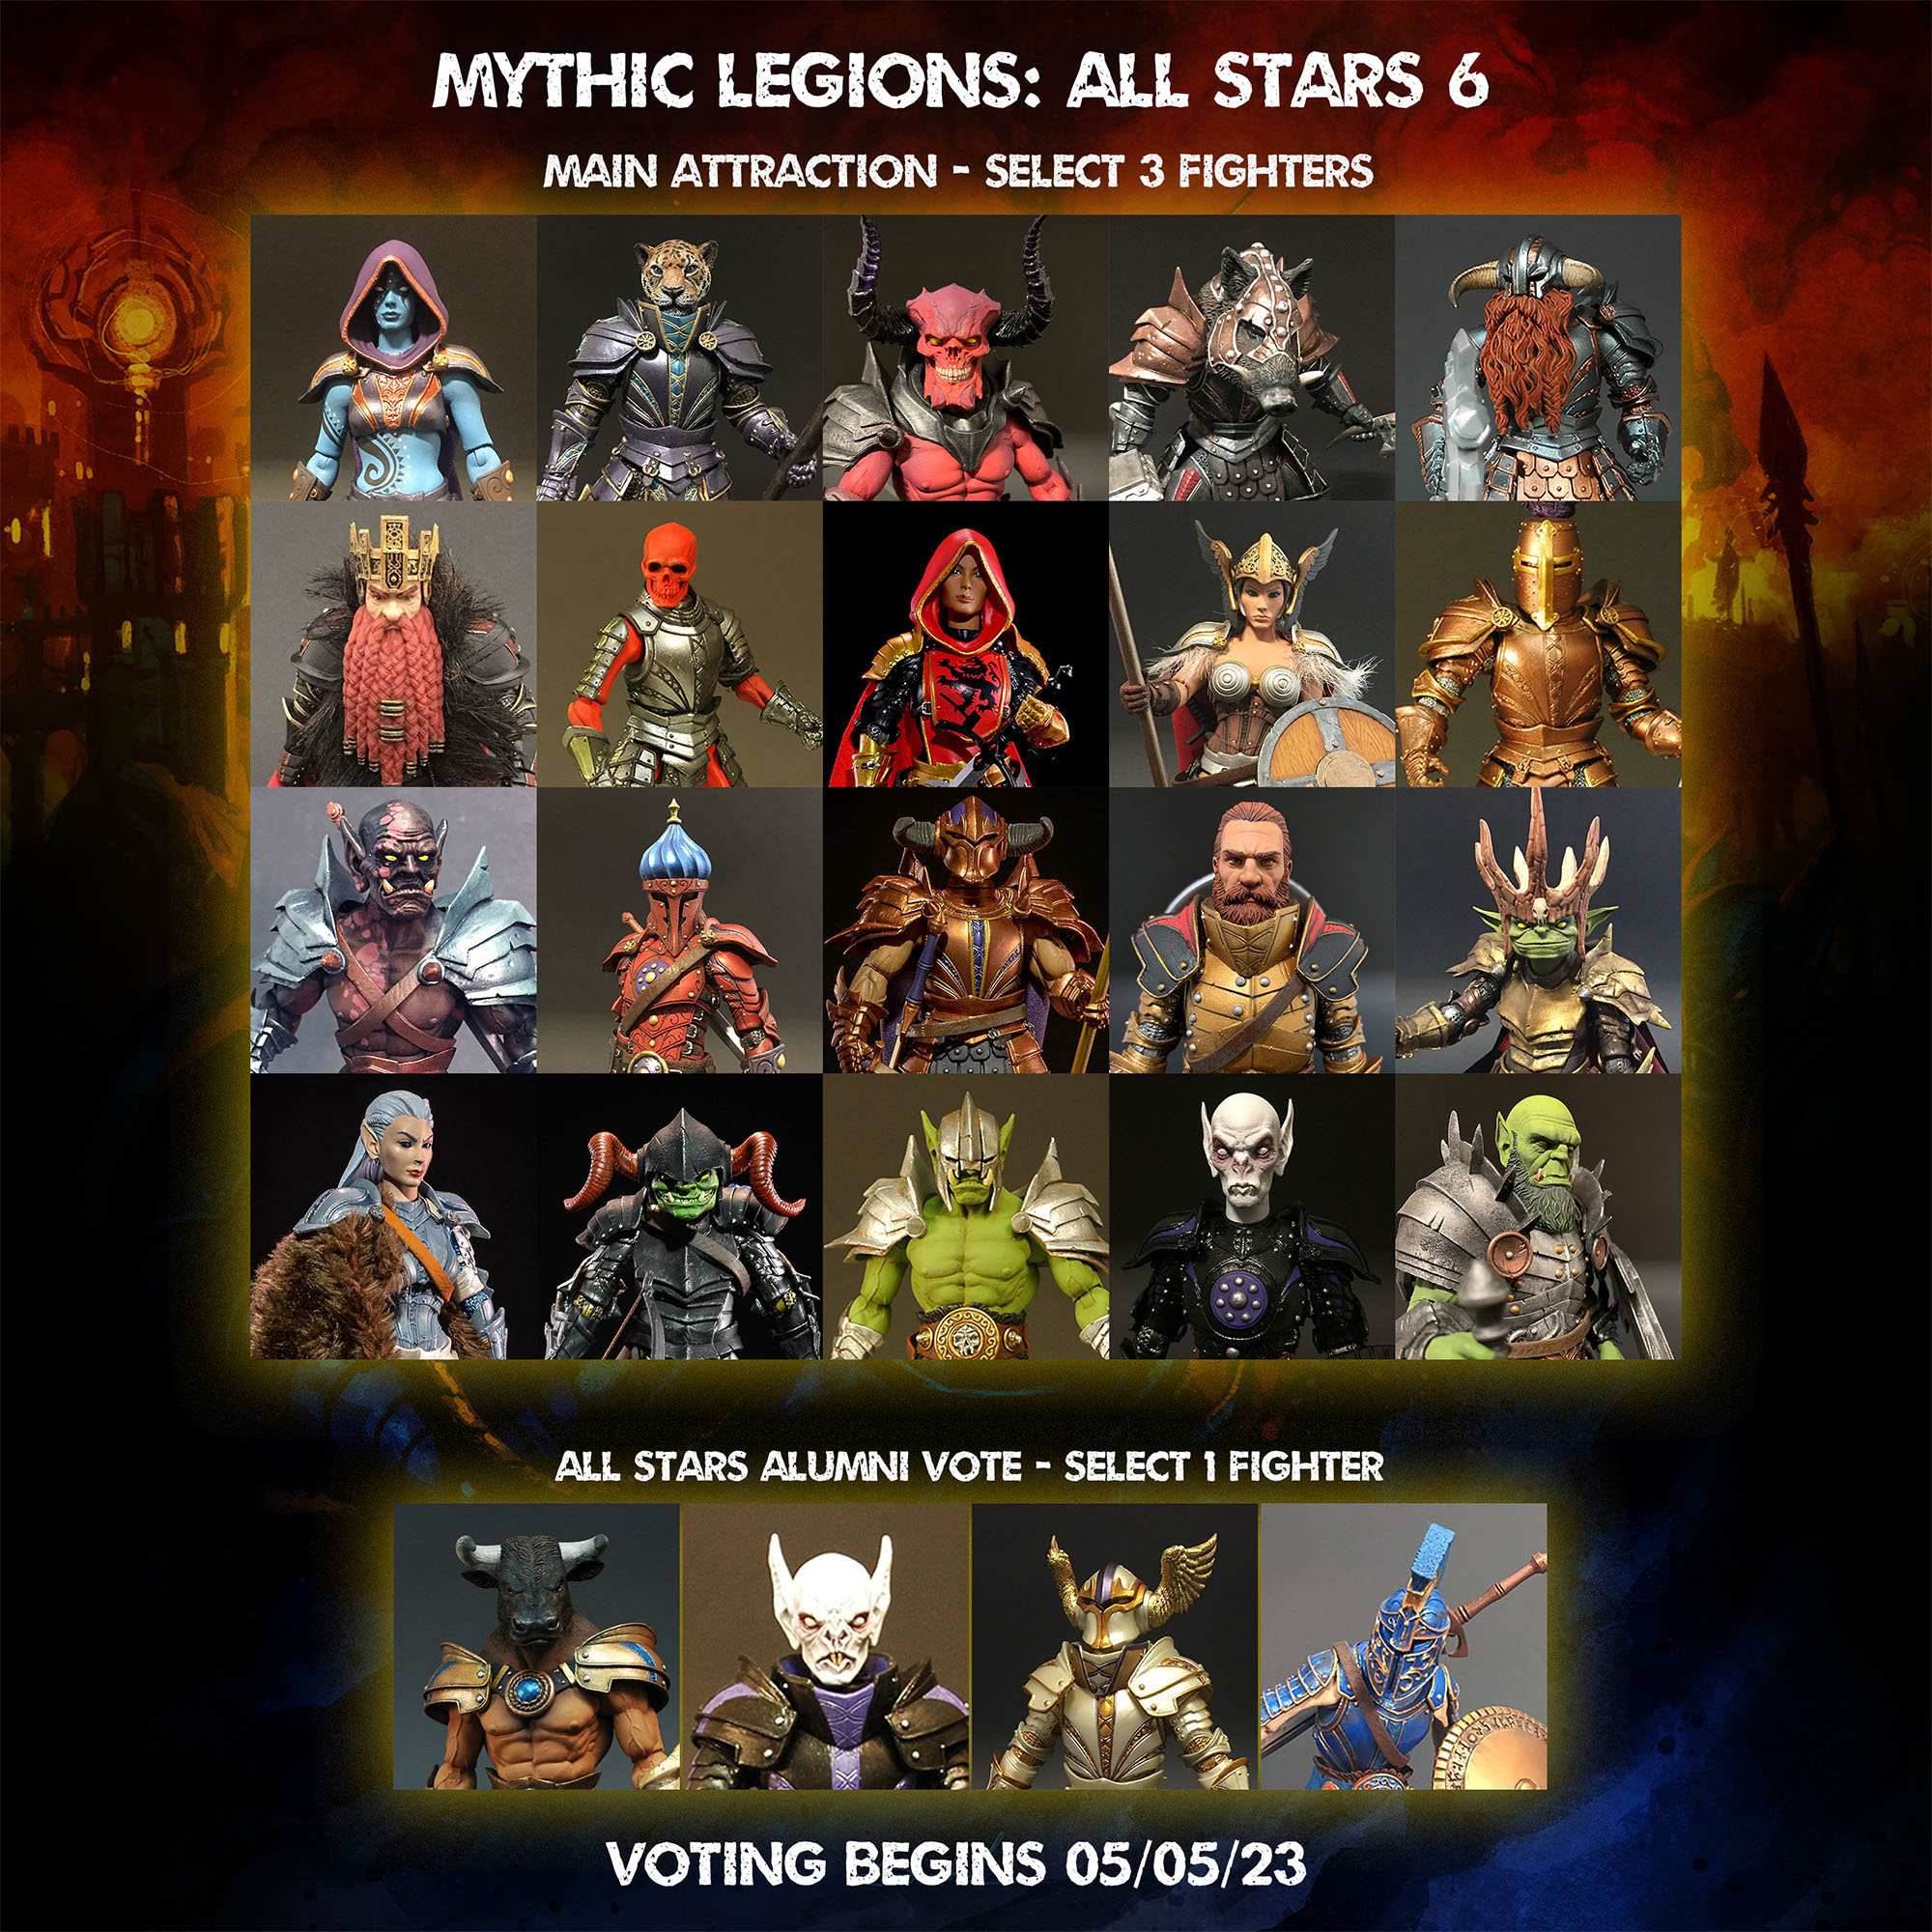 Mythic Legions: All Stars 6